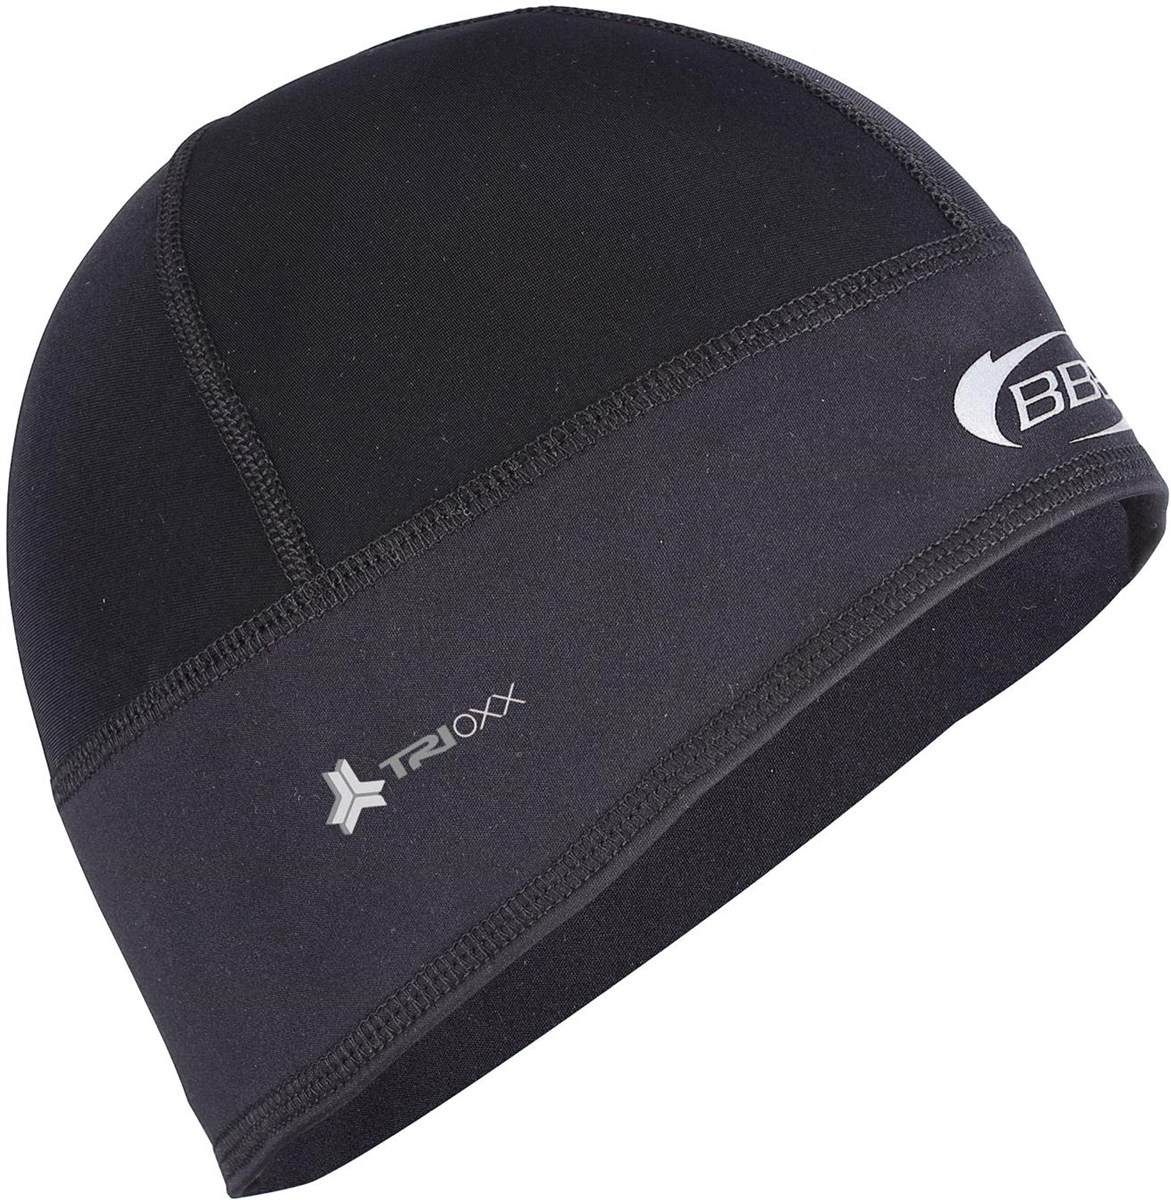 BBB WindBlock Winter Hat product image